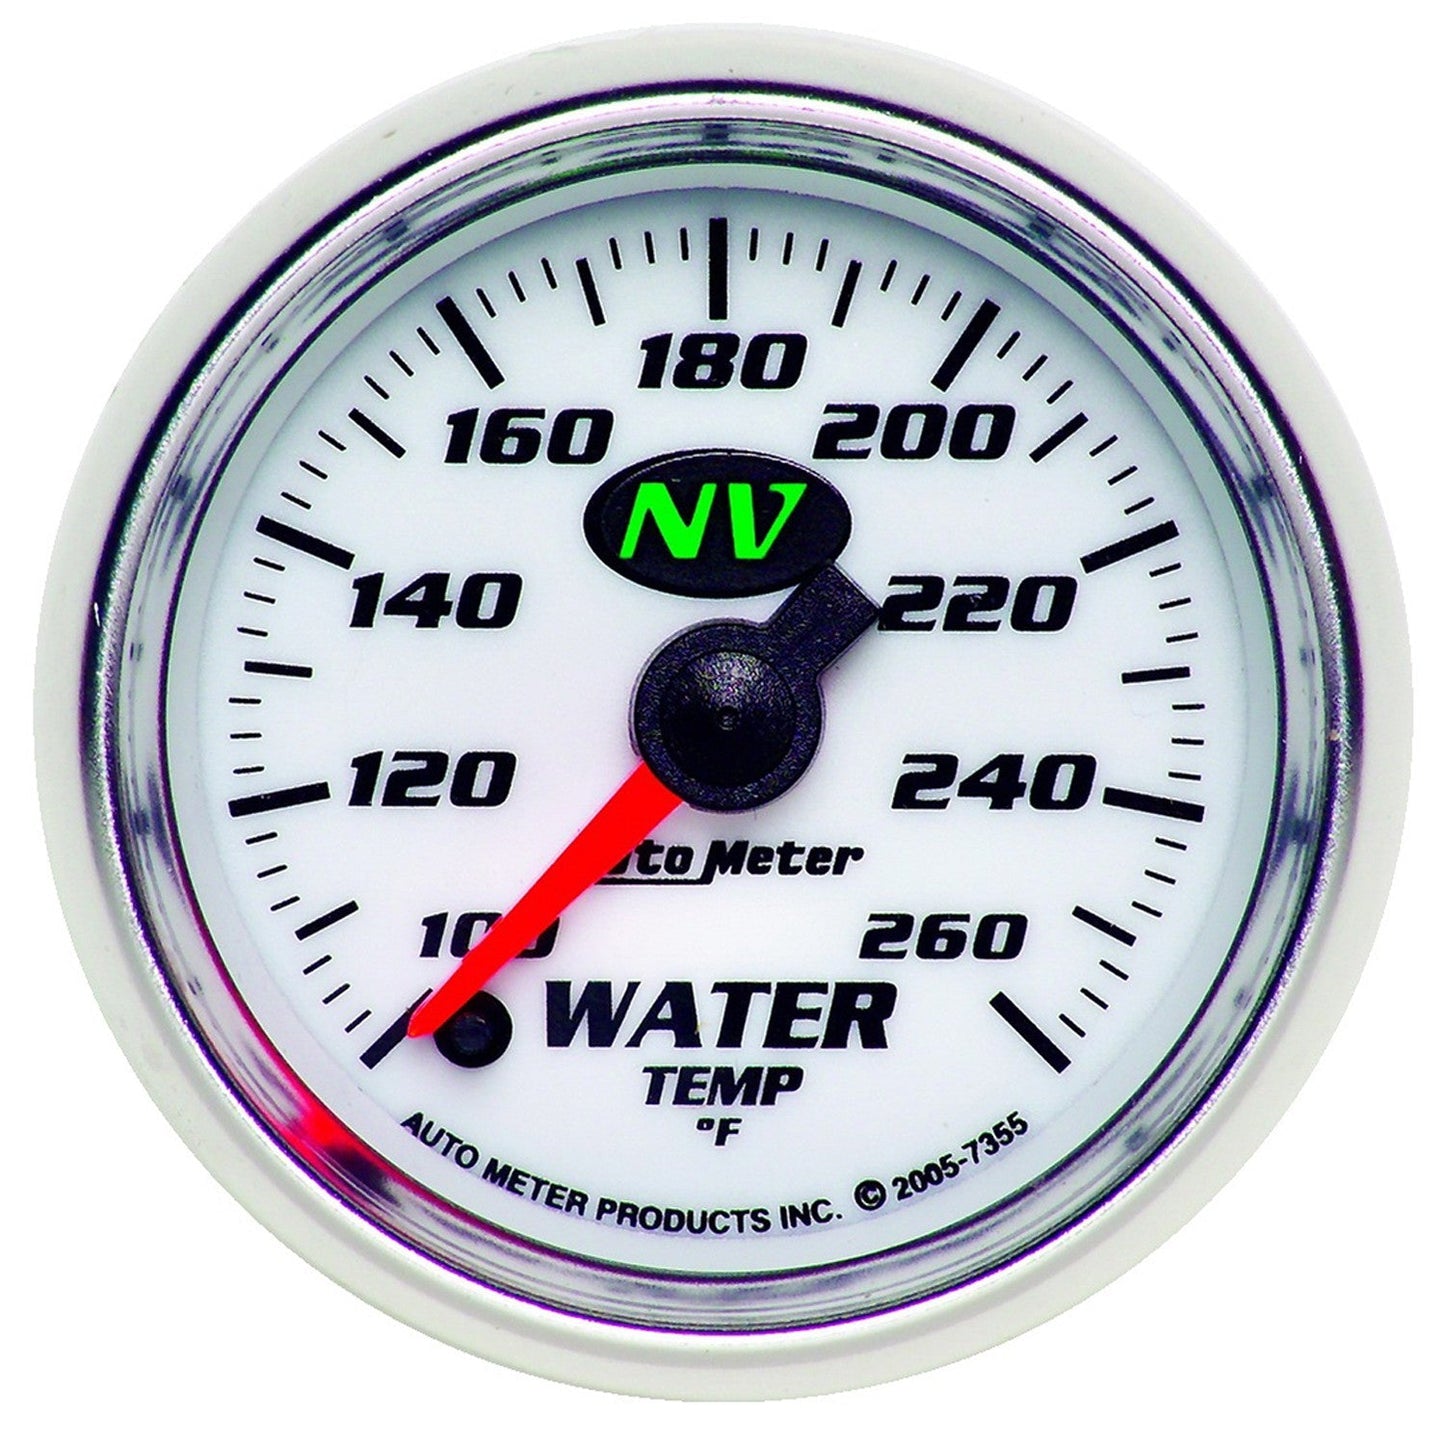 AutoMeter - 2-1/16" TEMPERATURA DA ÁGUA, 100-260 °F, MOTOR DE PASSO, NV (7355) 